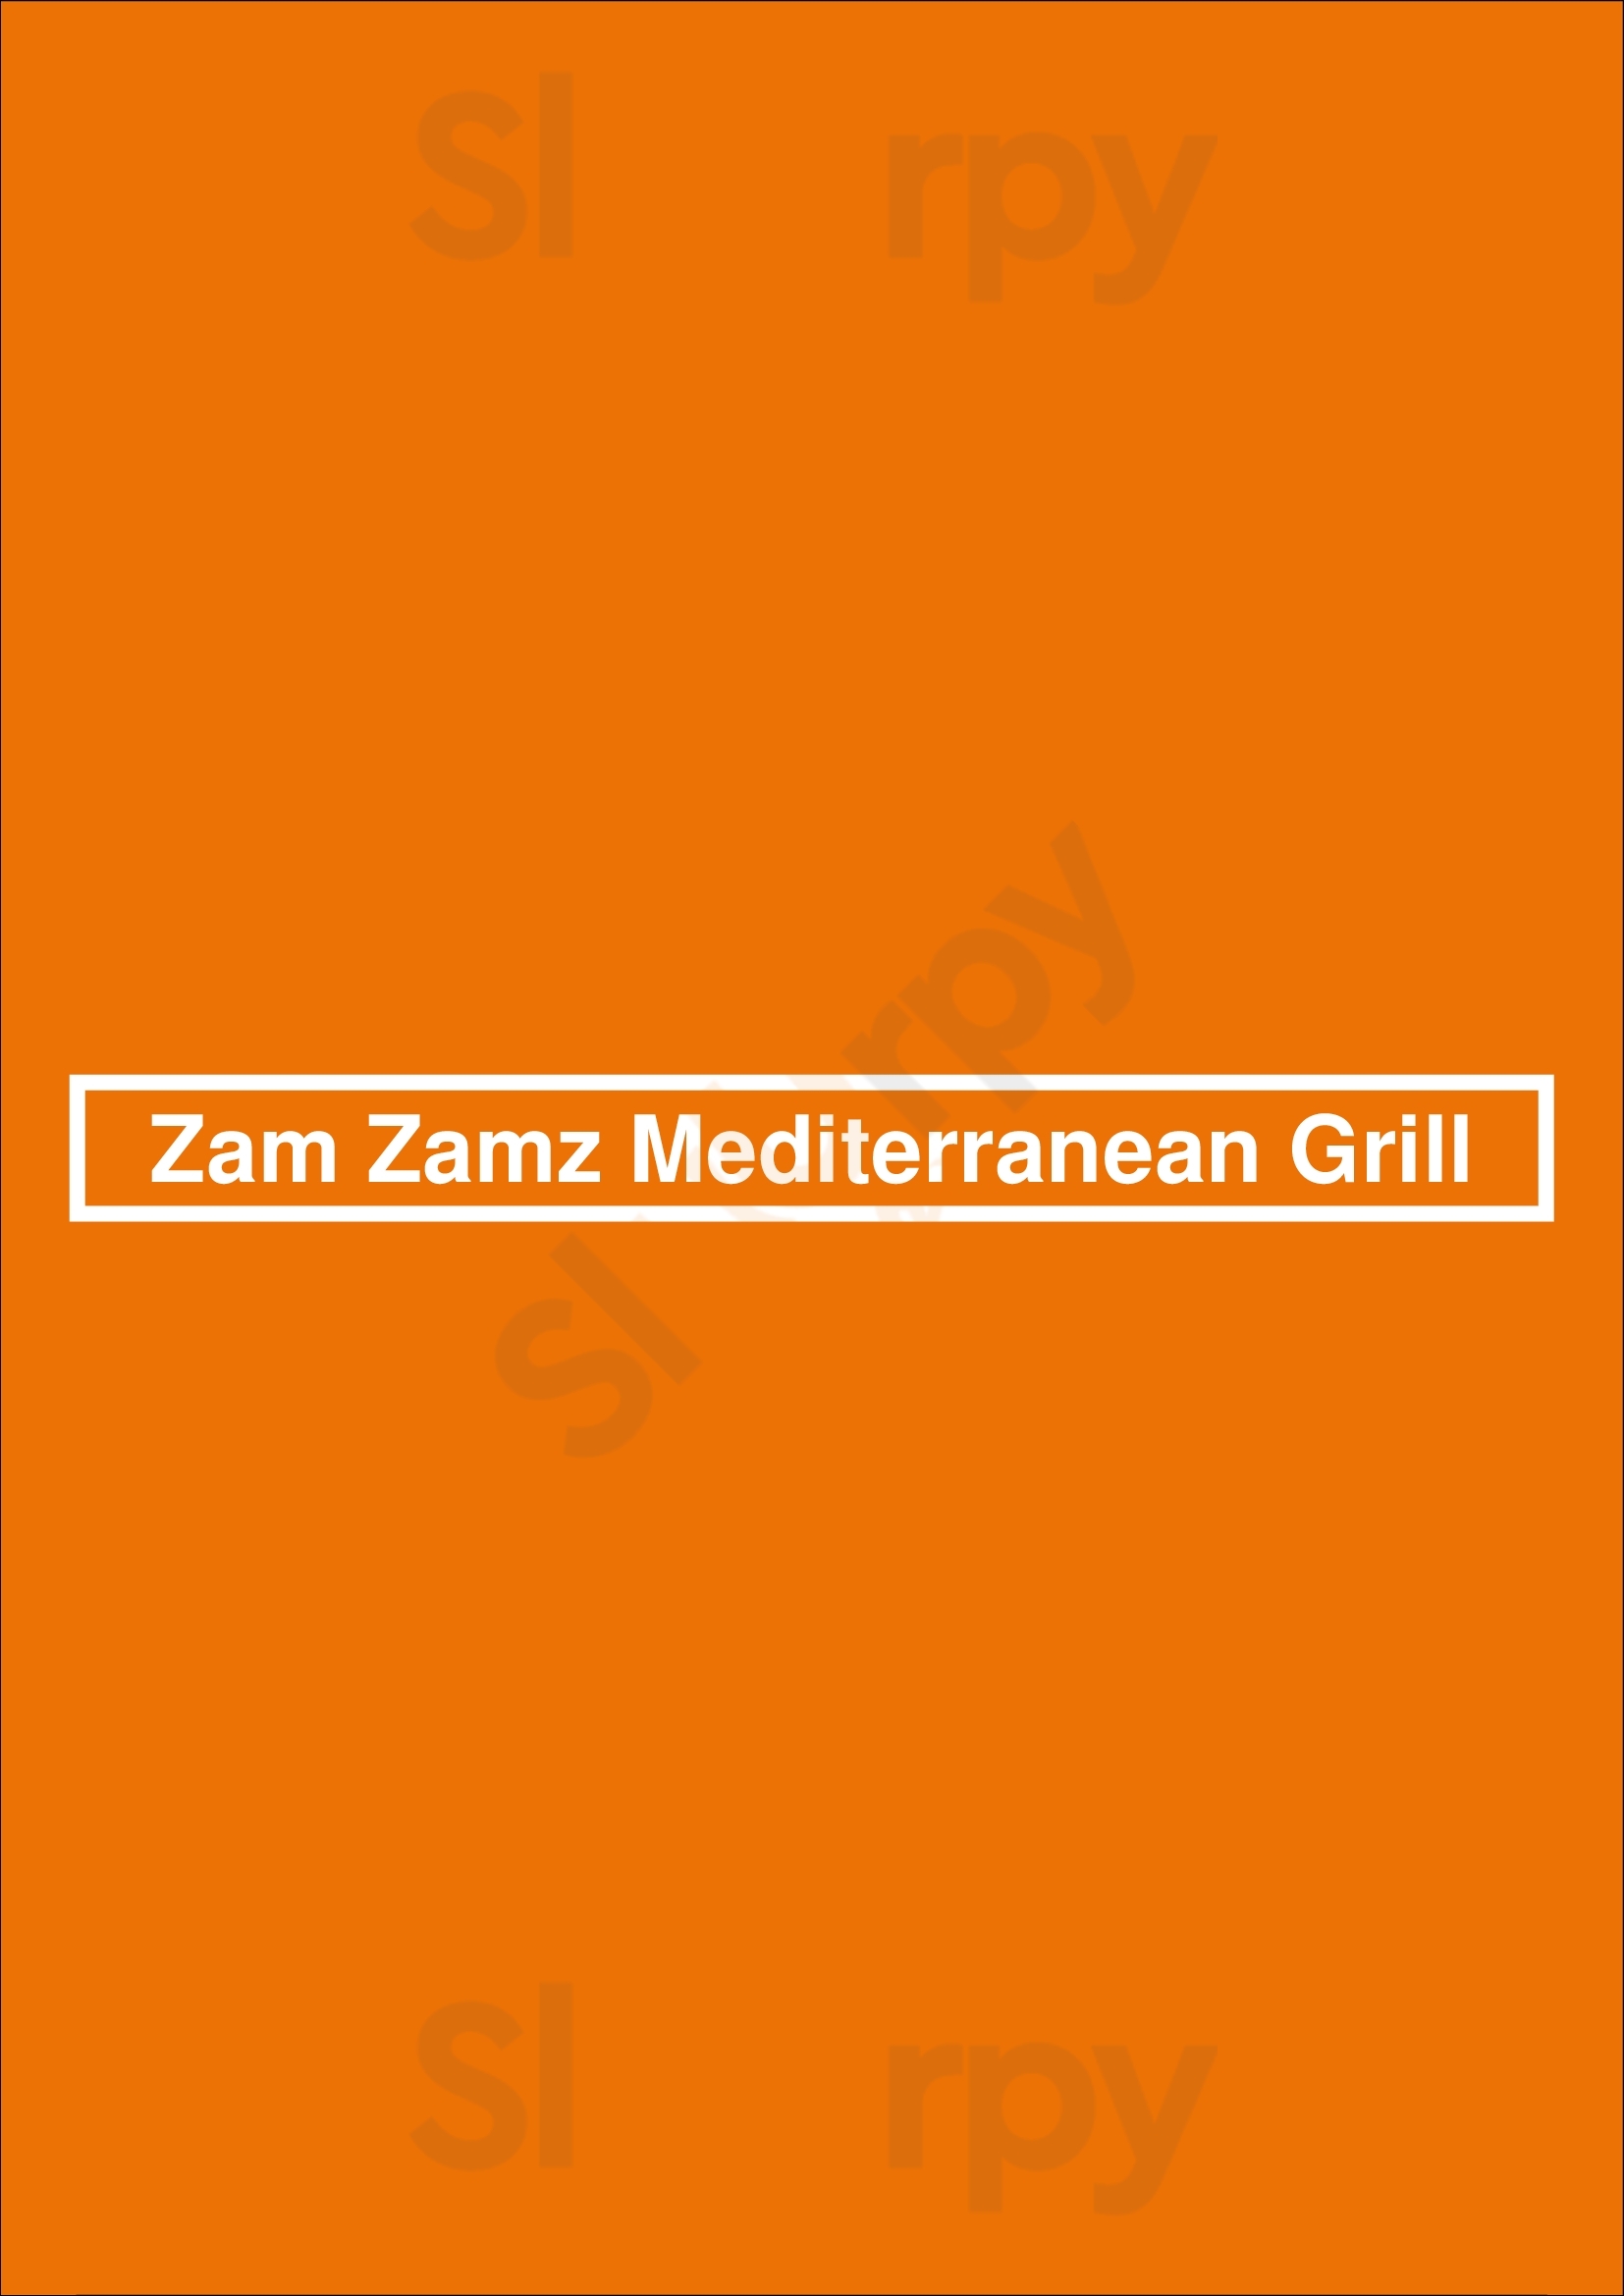 Zam Zamz Mediterranean Grill Memphis Menu - 1